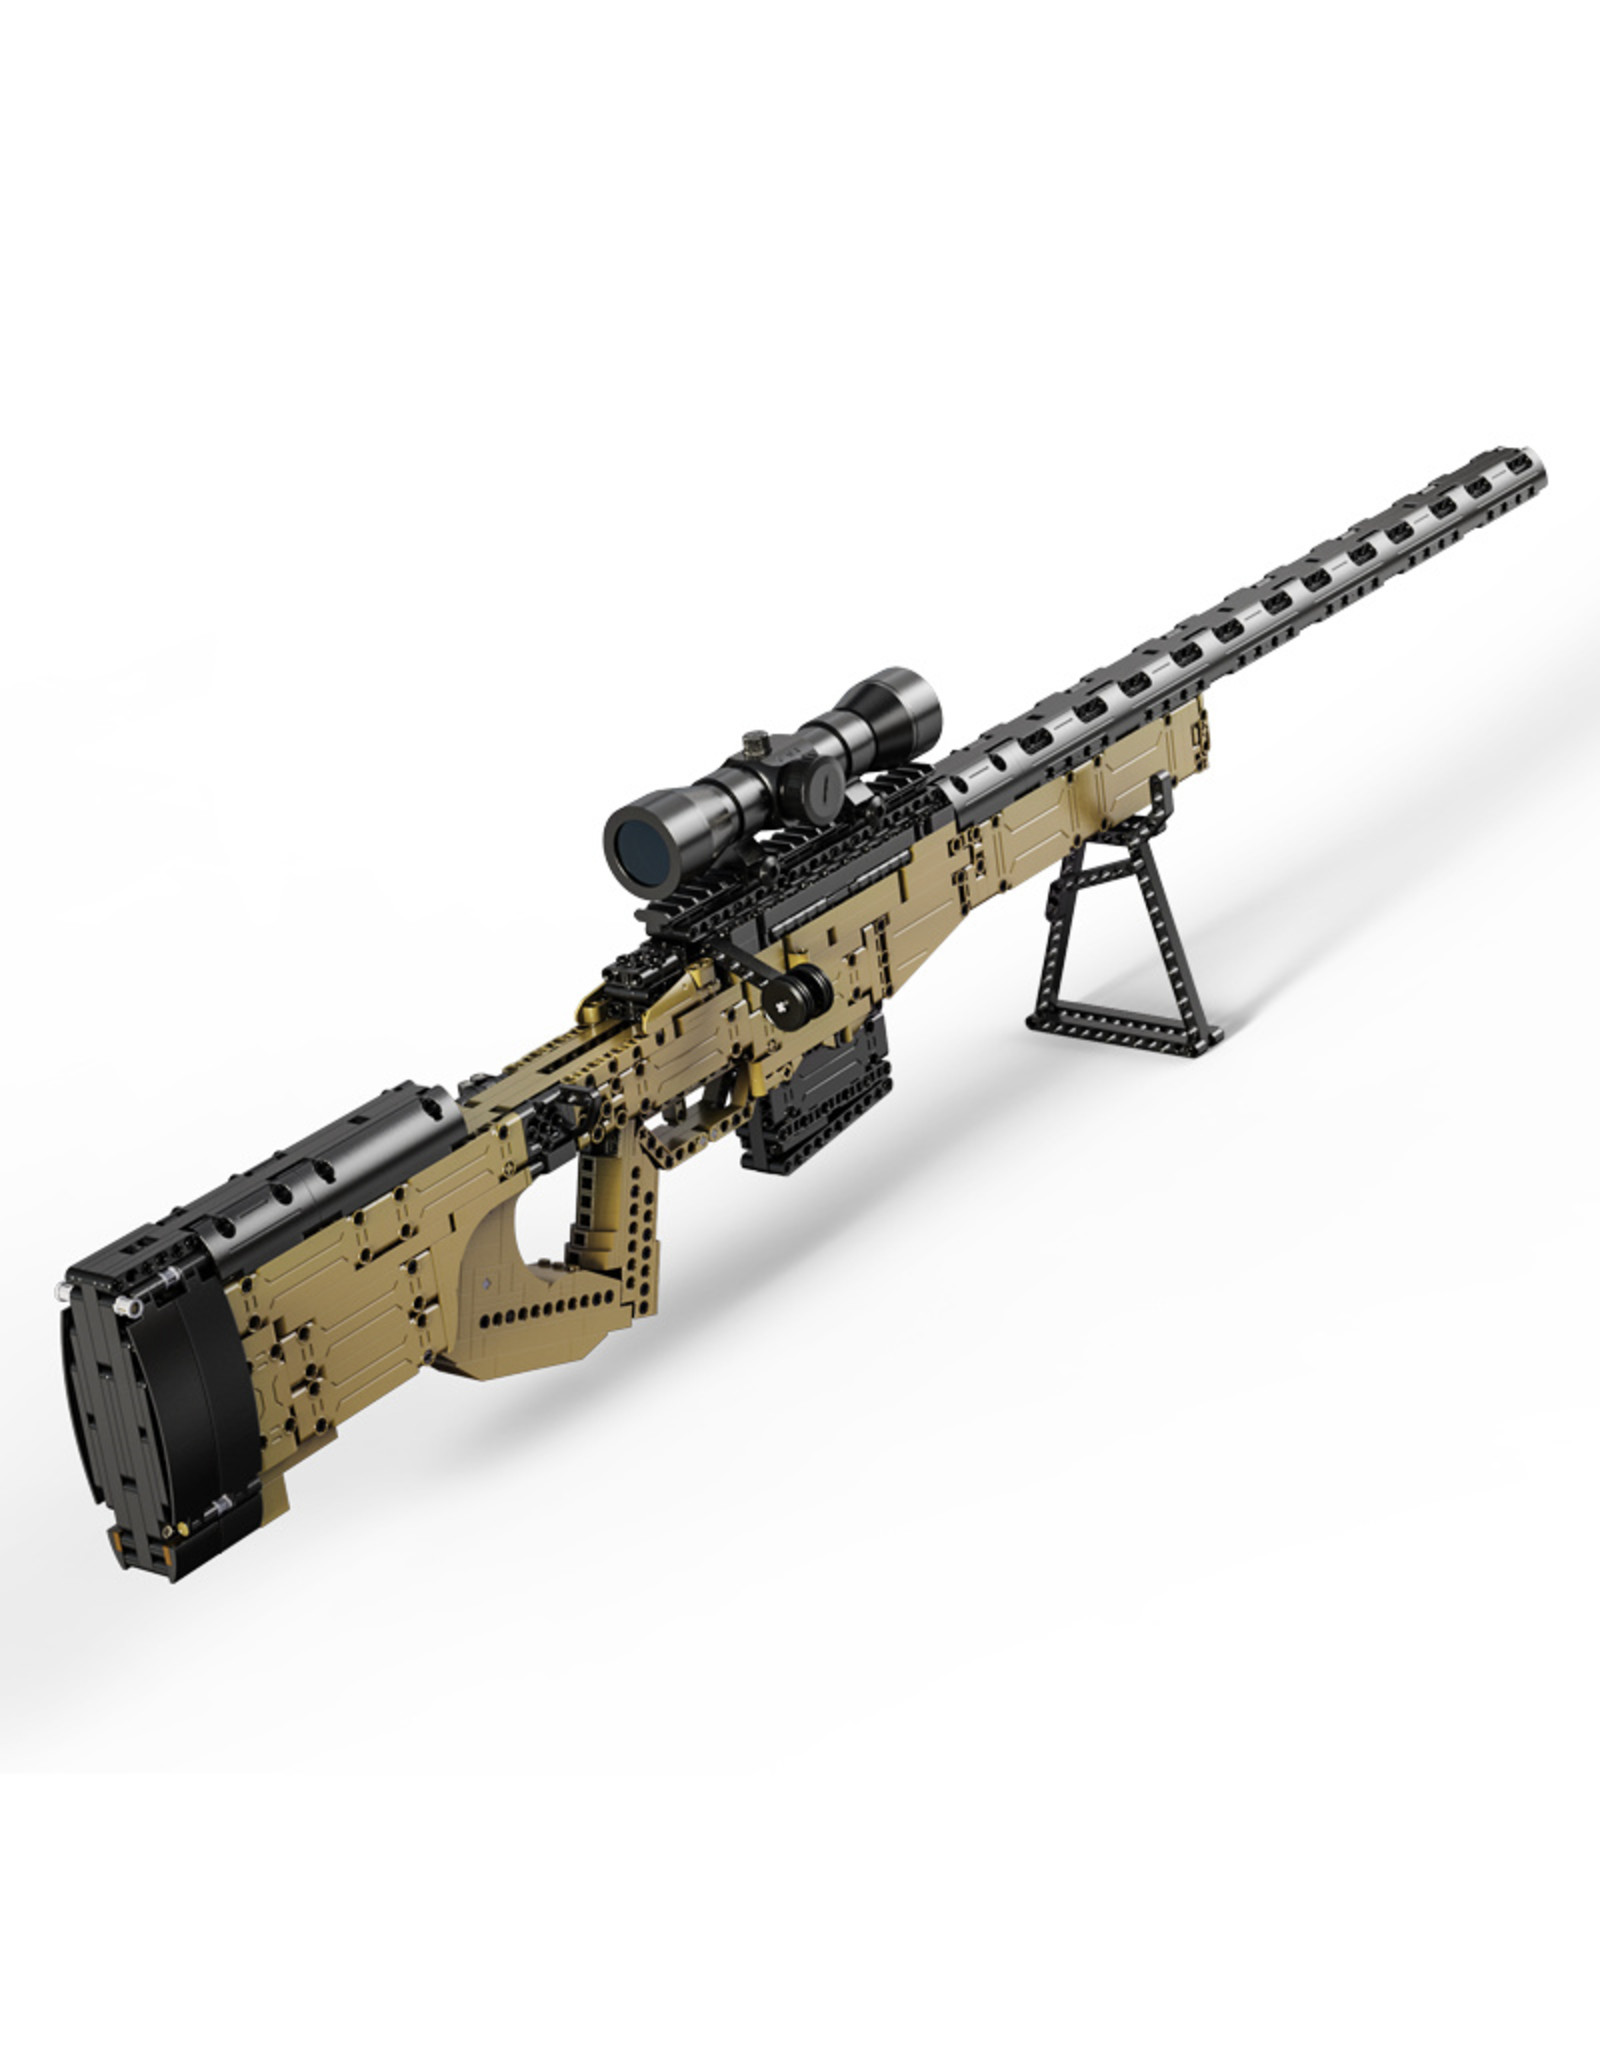 CaDA bricks CaDA Sniper rifle